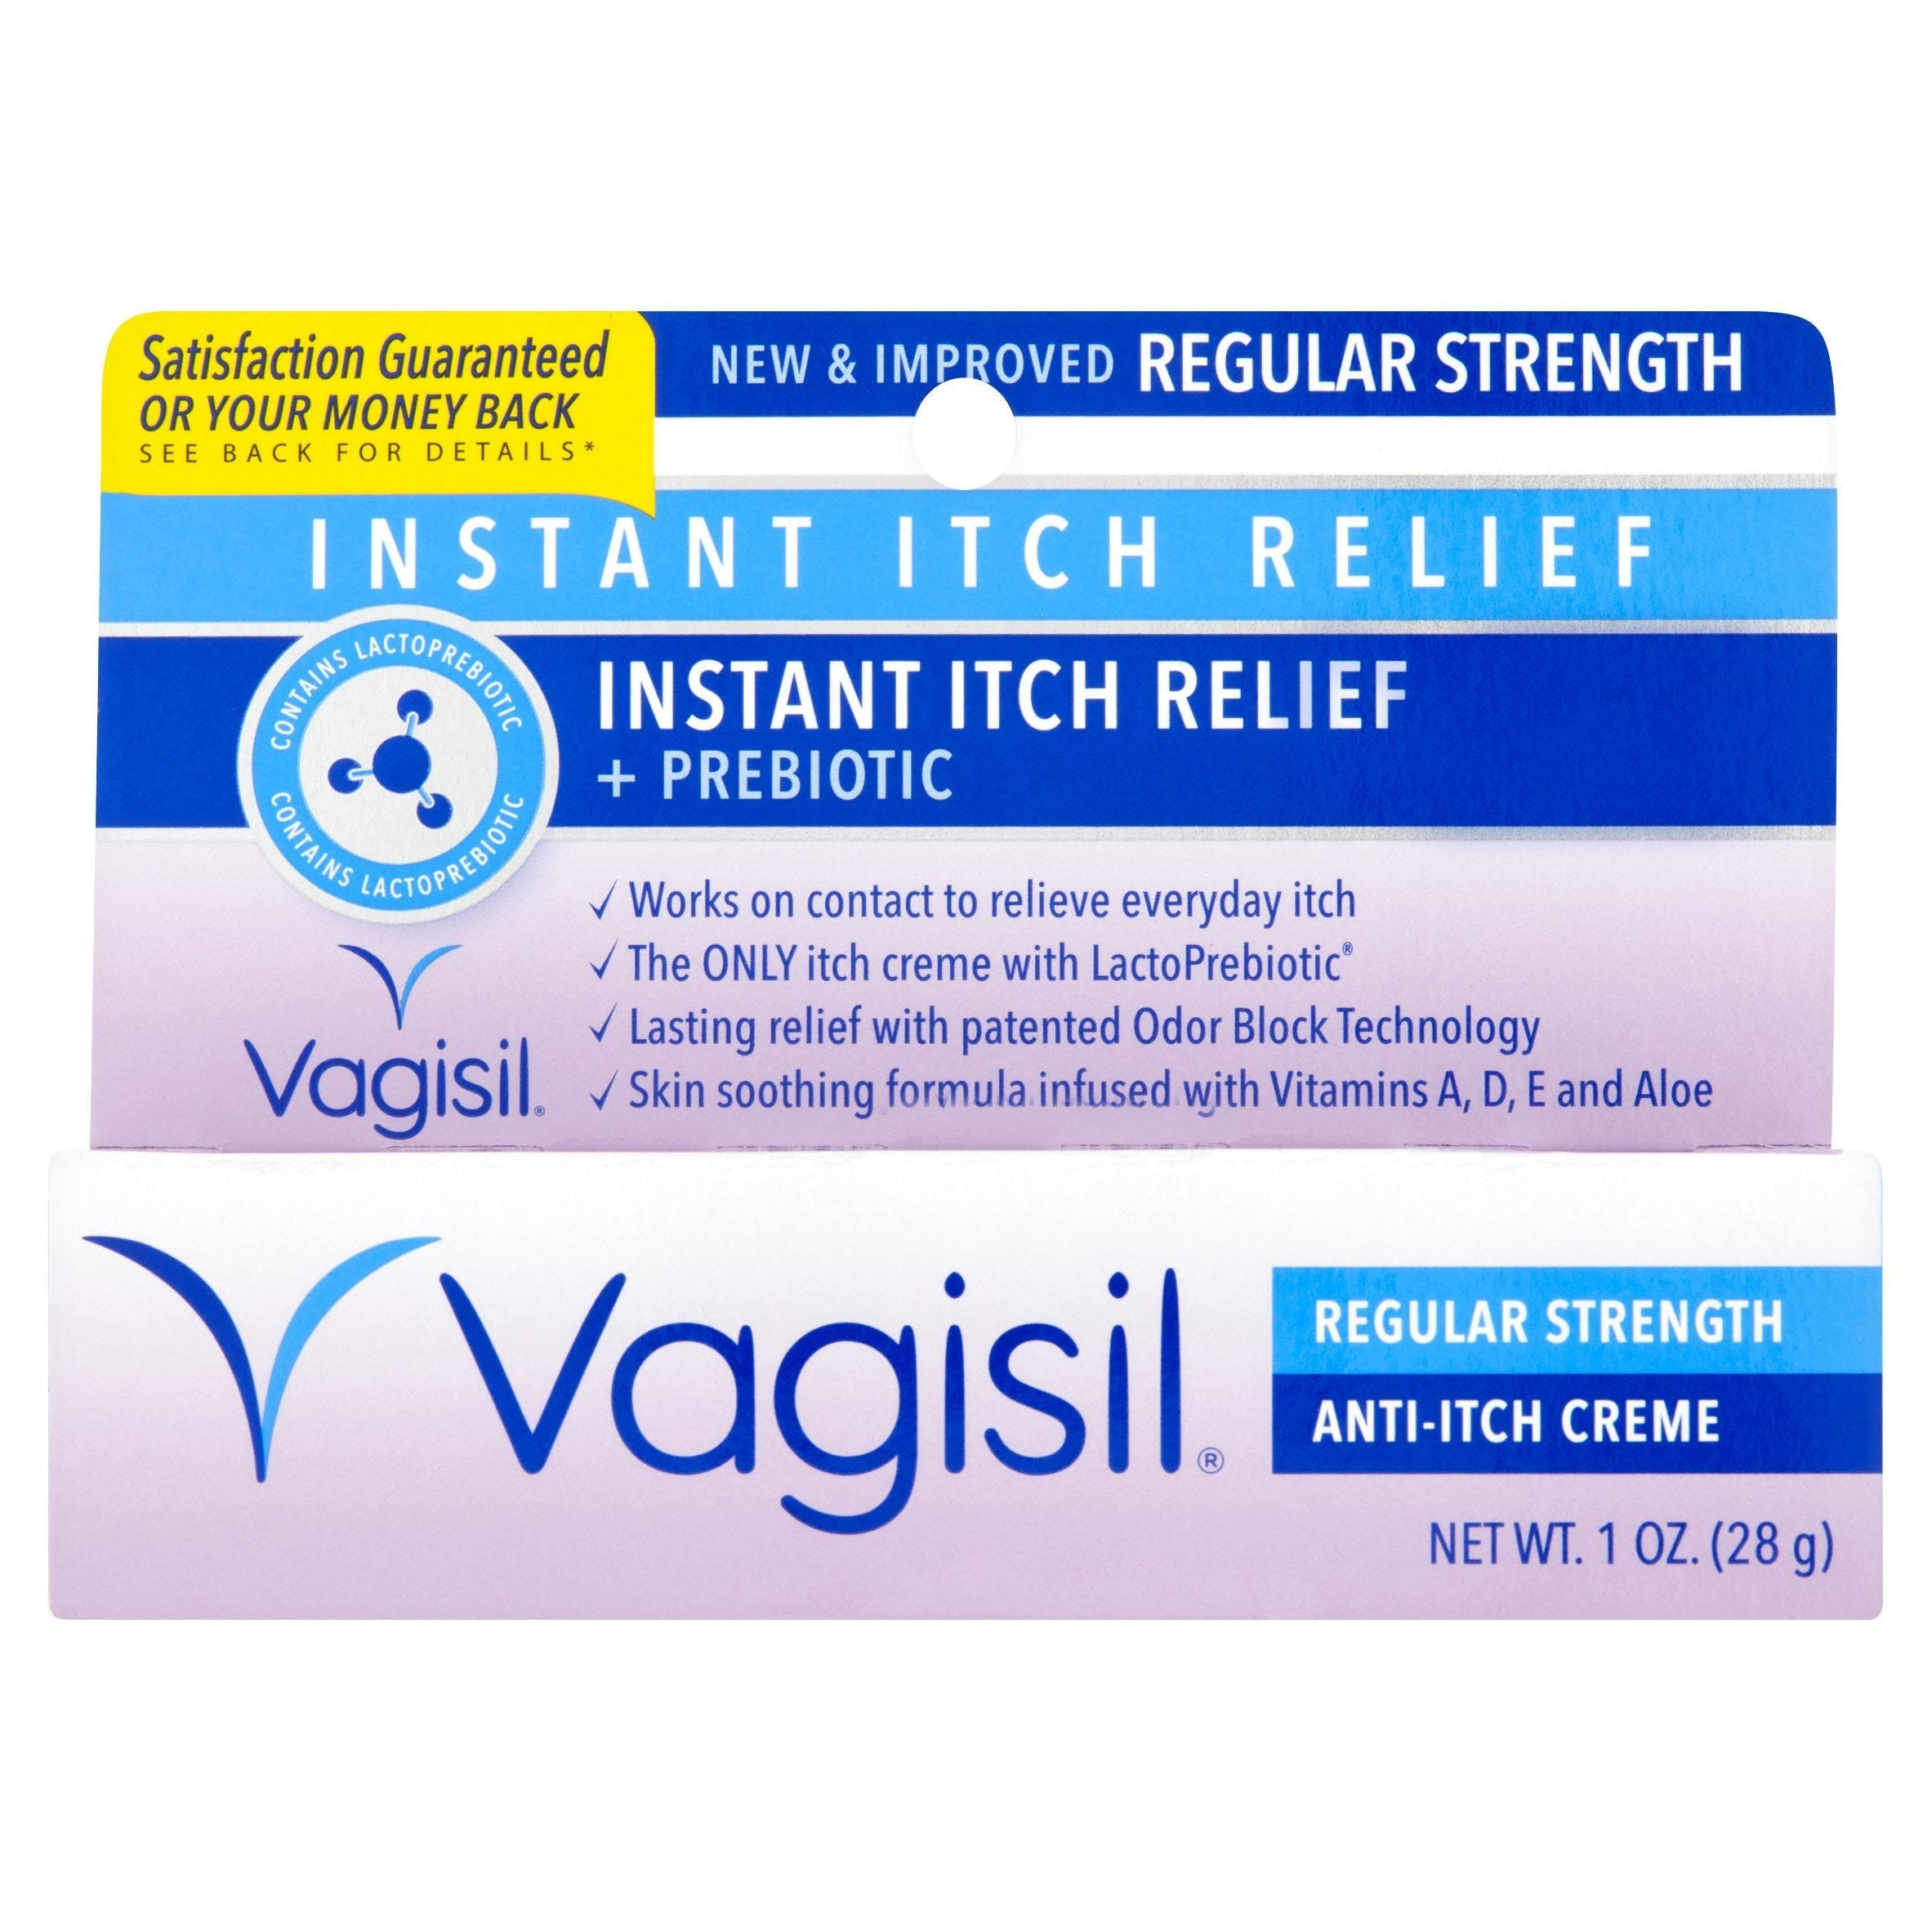 Vagisil Regular Strength Anti-Itch Creme - 1oz